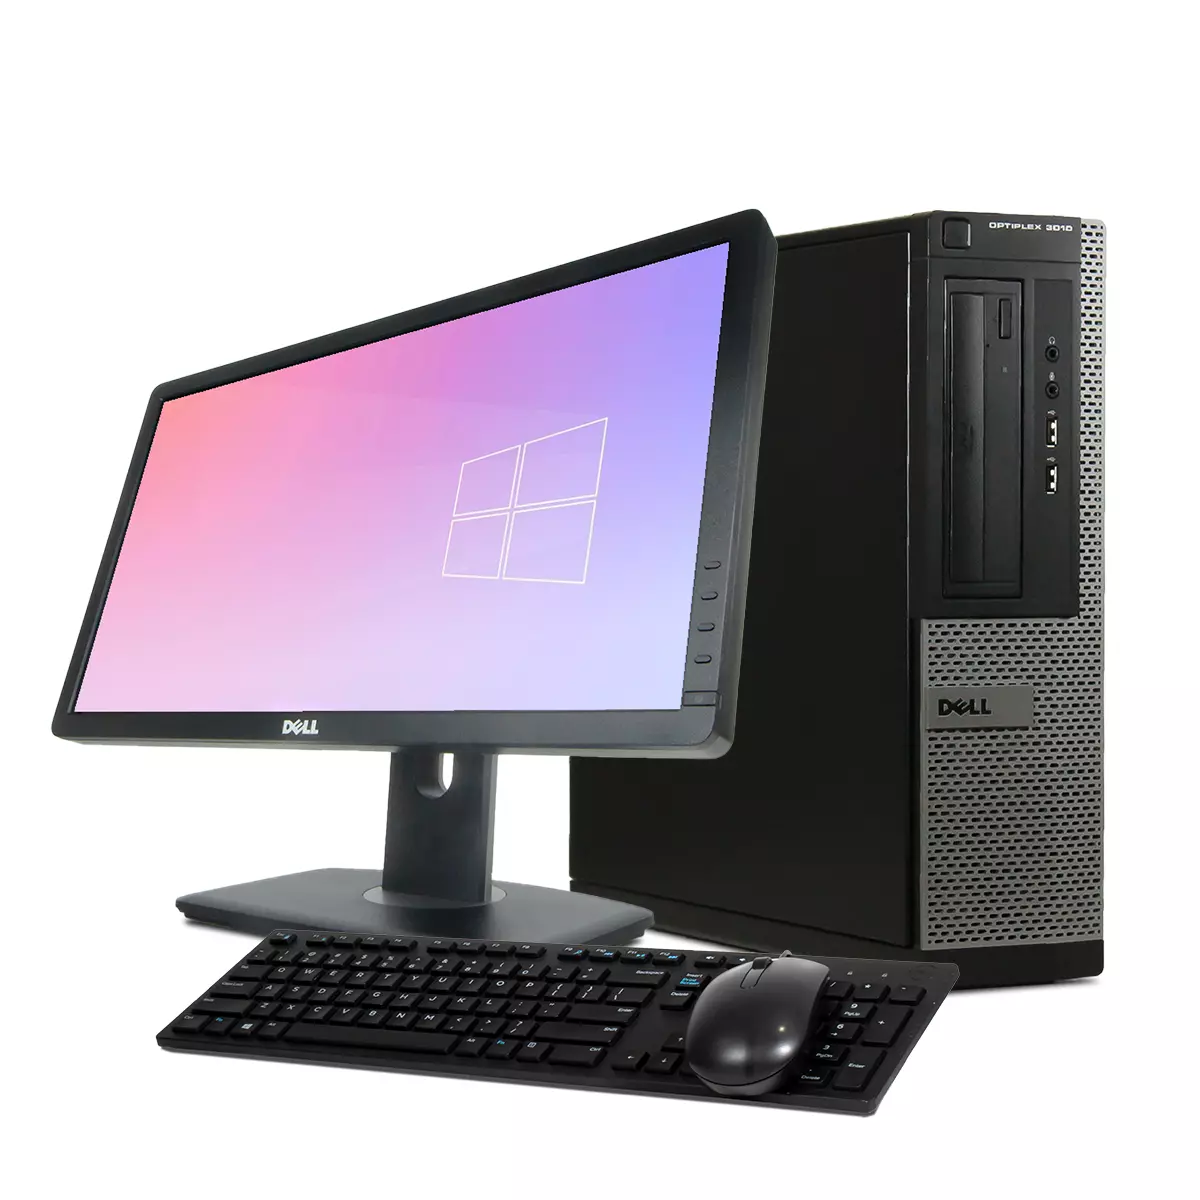 Monitor Dell 19 - PC ONE TIJUANA